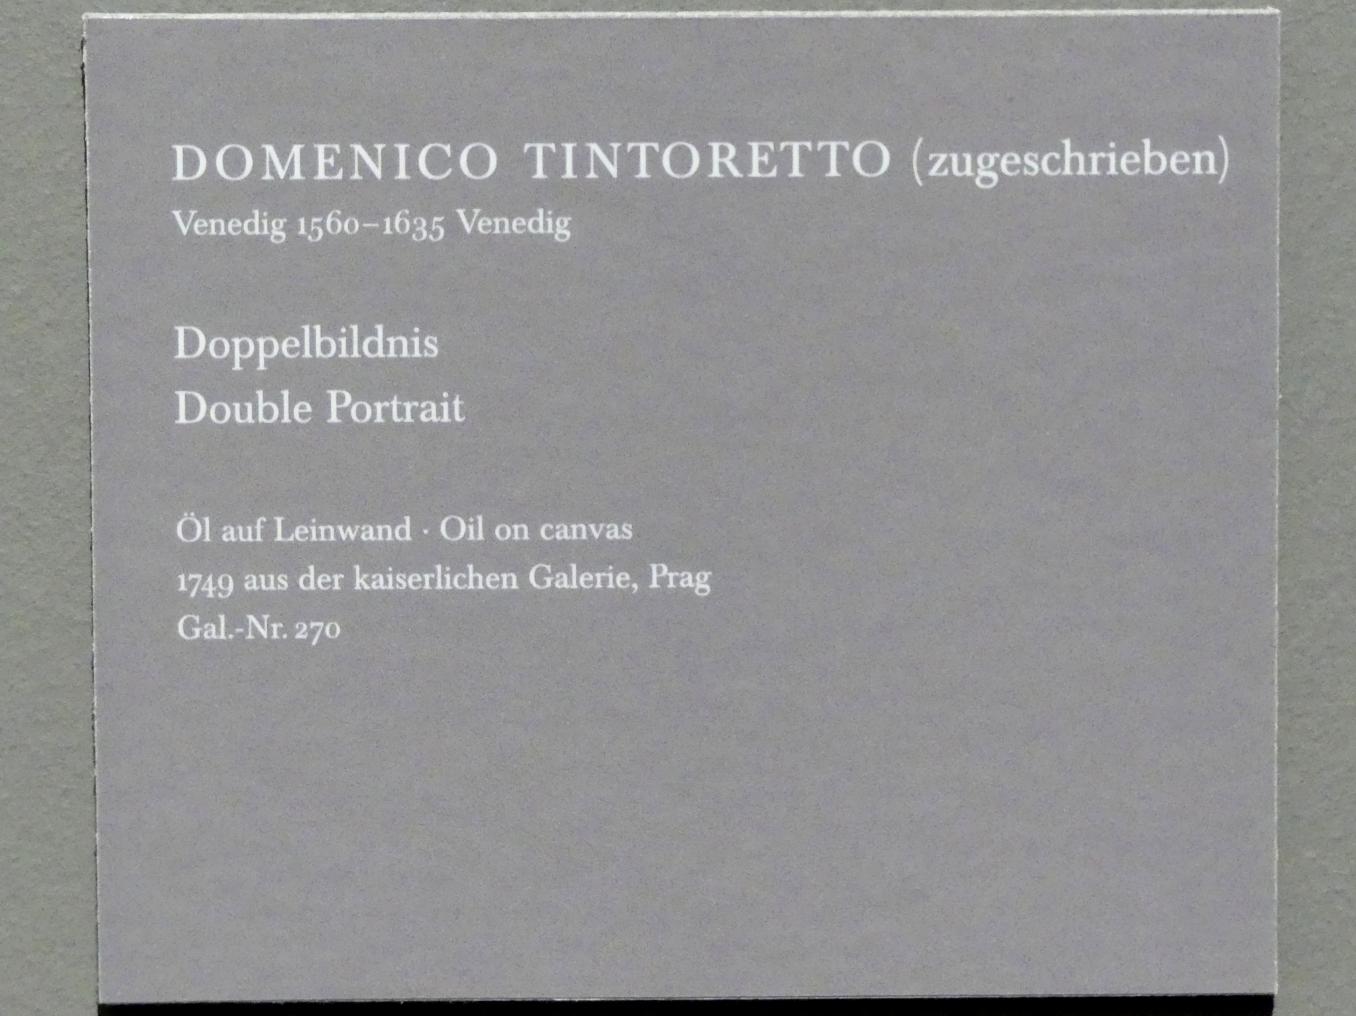 Domenico Robusti (Domenico Tintoretto) (1579–1605), Doppelbildnis, Dresden, Gemäldegalerie Alte Meister, EG: Venezianische Malerei, Undatiert, Bild 2/2